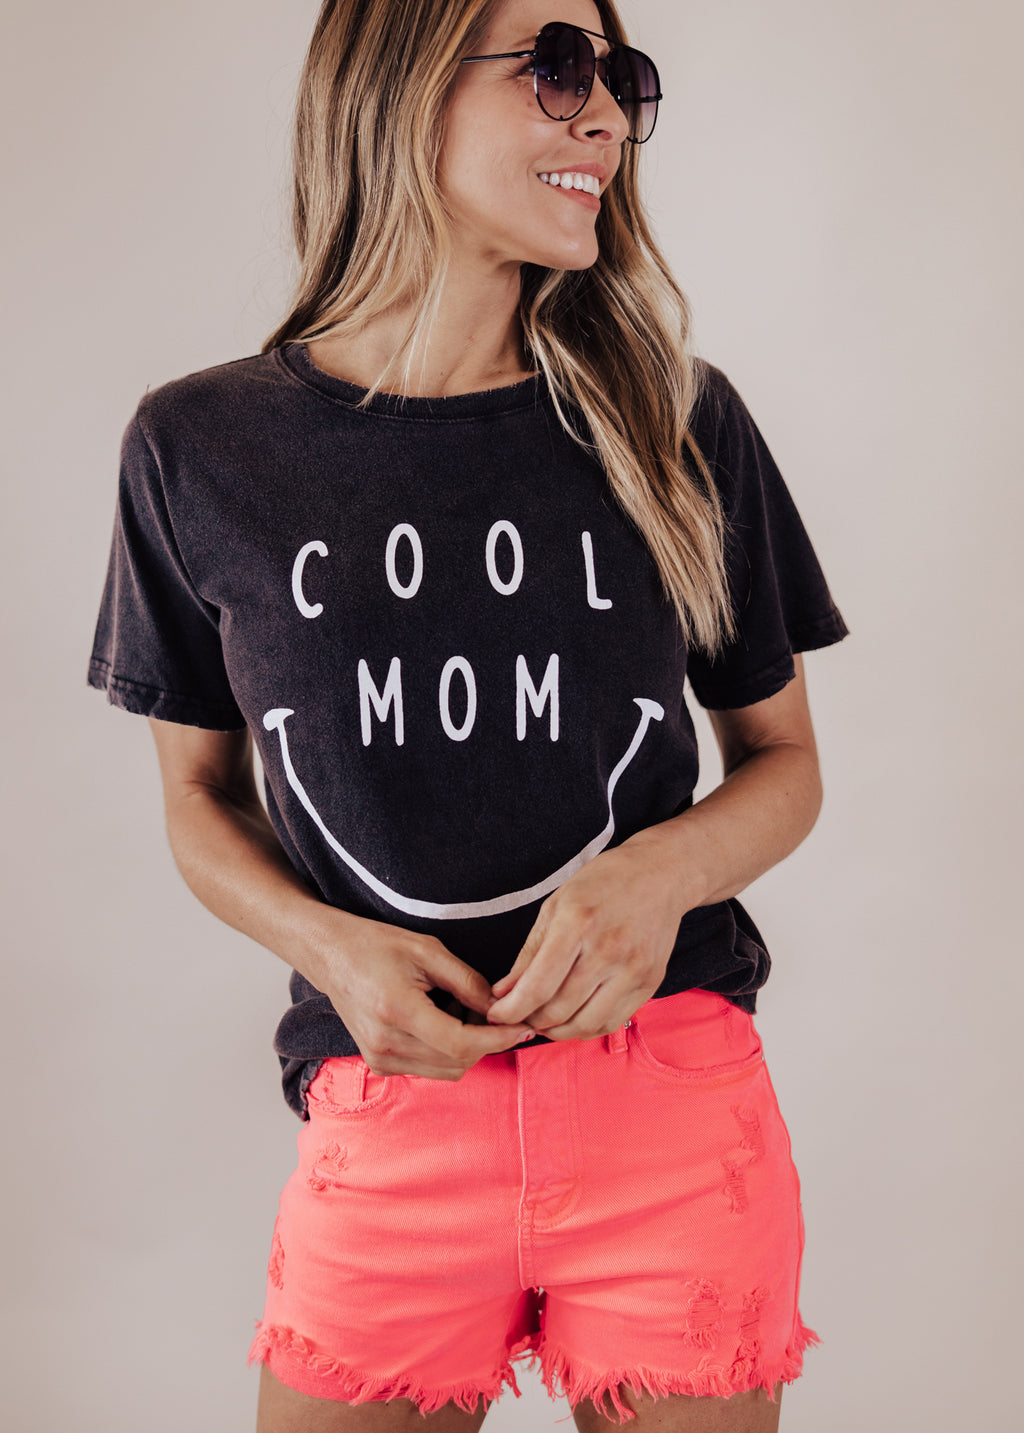 SMALL: #37 Happy Cool Mom *VINTAGE BLACK